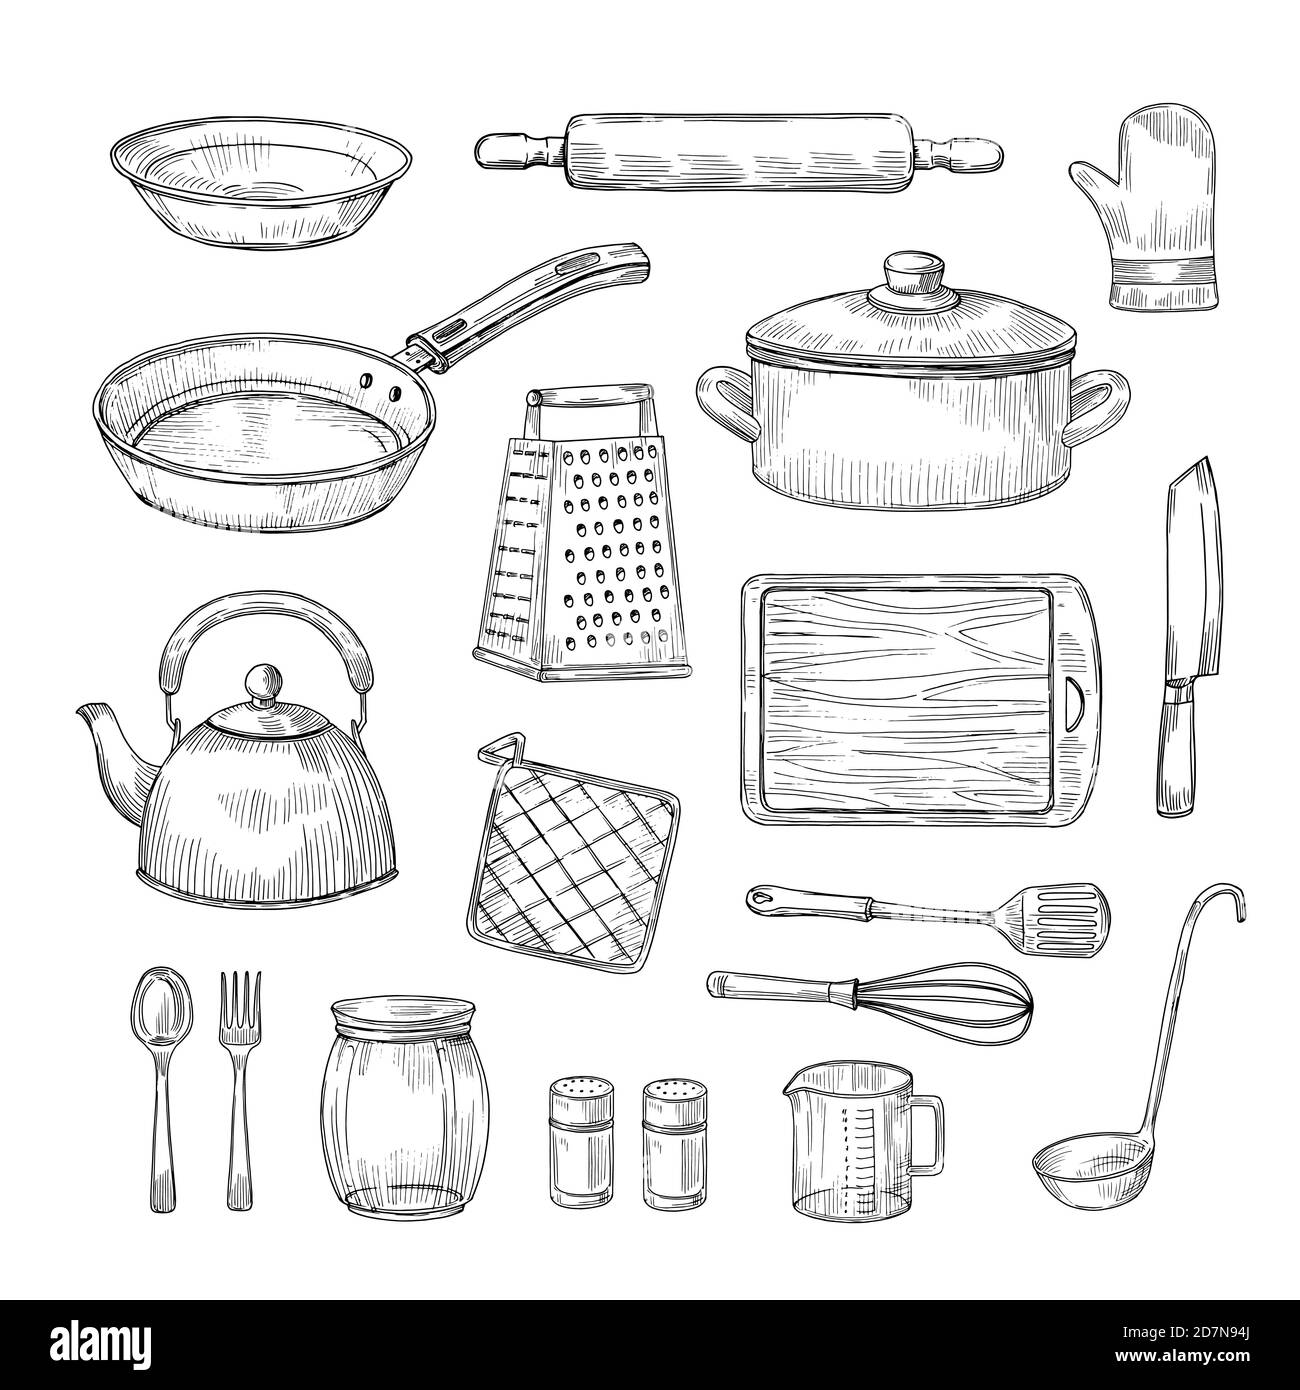 https://c8.alamy.com/comp/2D7N94J/sketch-kitchen-tools-cooking-utensils-hand-drawn-kitchenware-doodle-chef-equipment-vector-set-illustration-of-kitchenware-equipment-for-cooking-2D7N94J.jpg